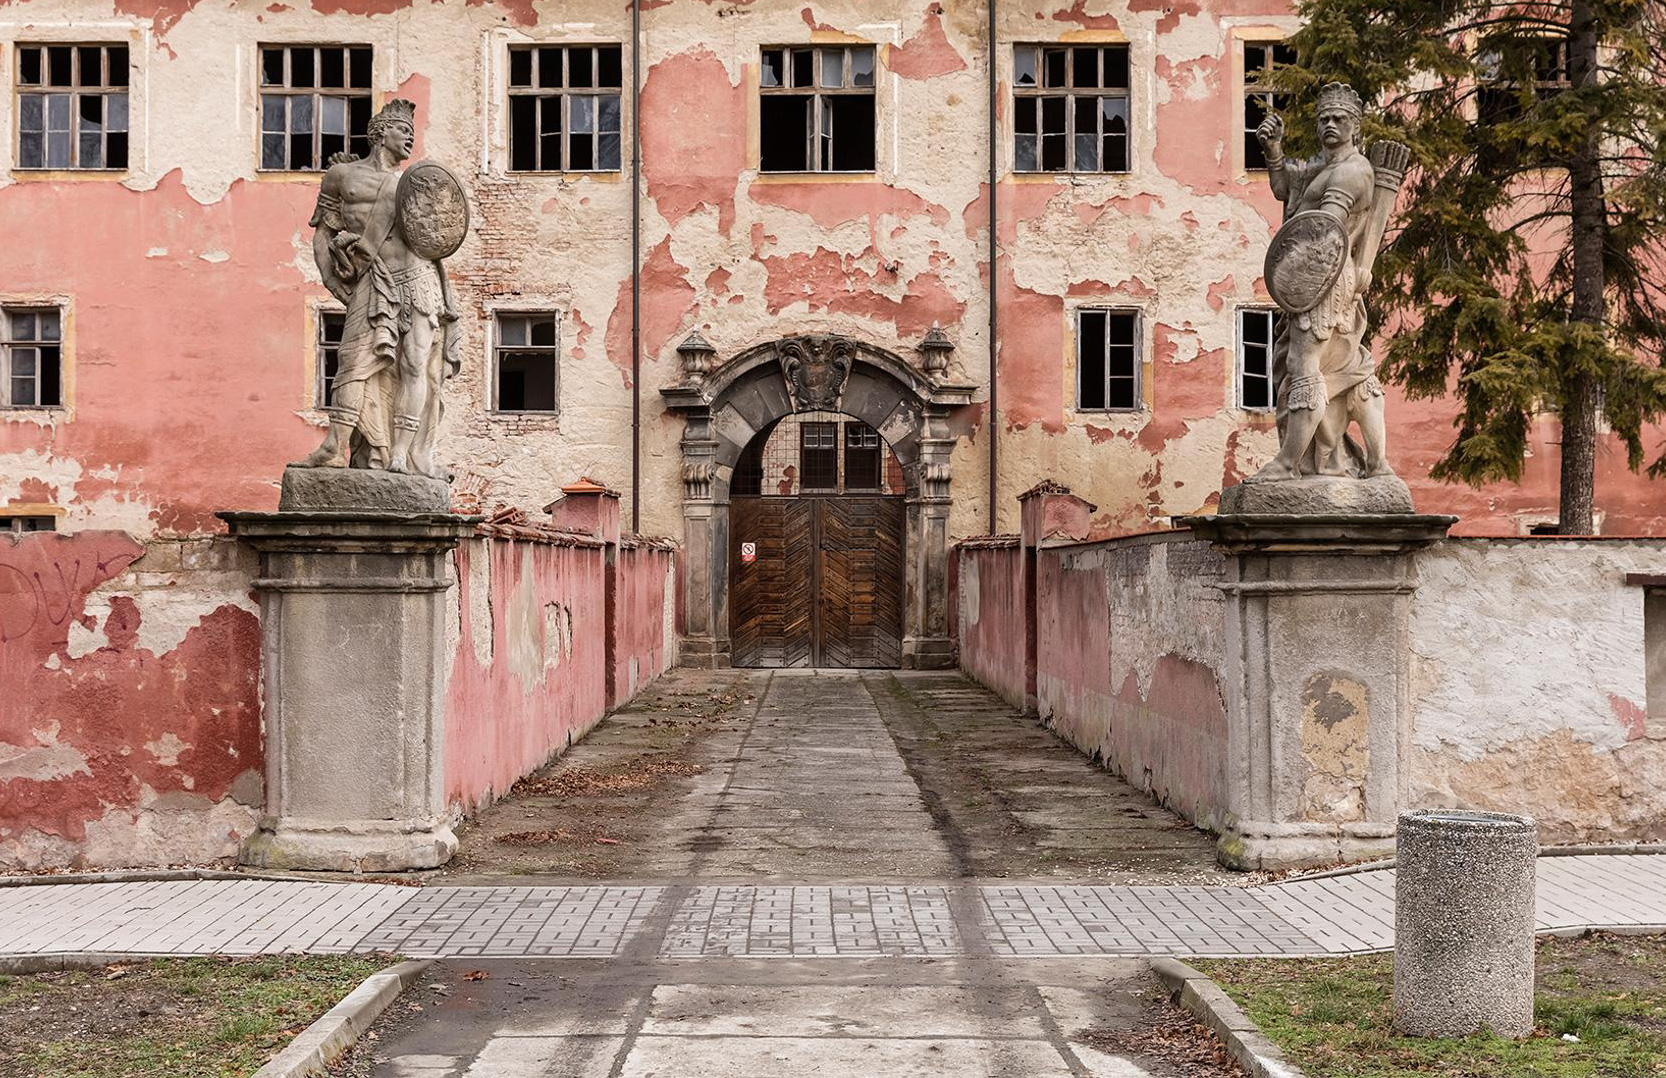 Renovation challenge: a bohemian castle near Prague is ripe for redevelopment